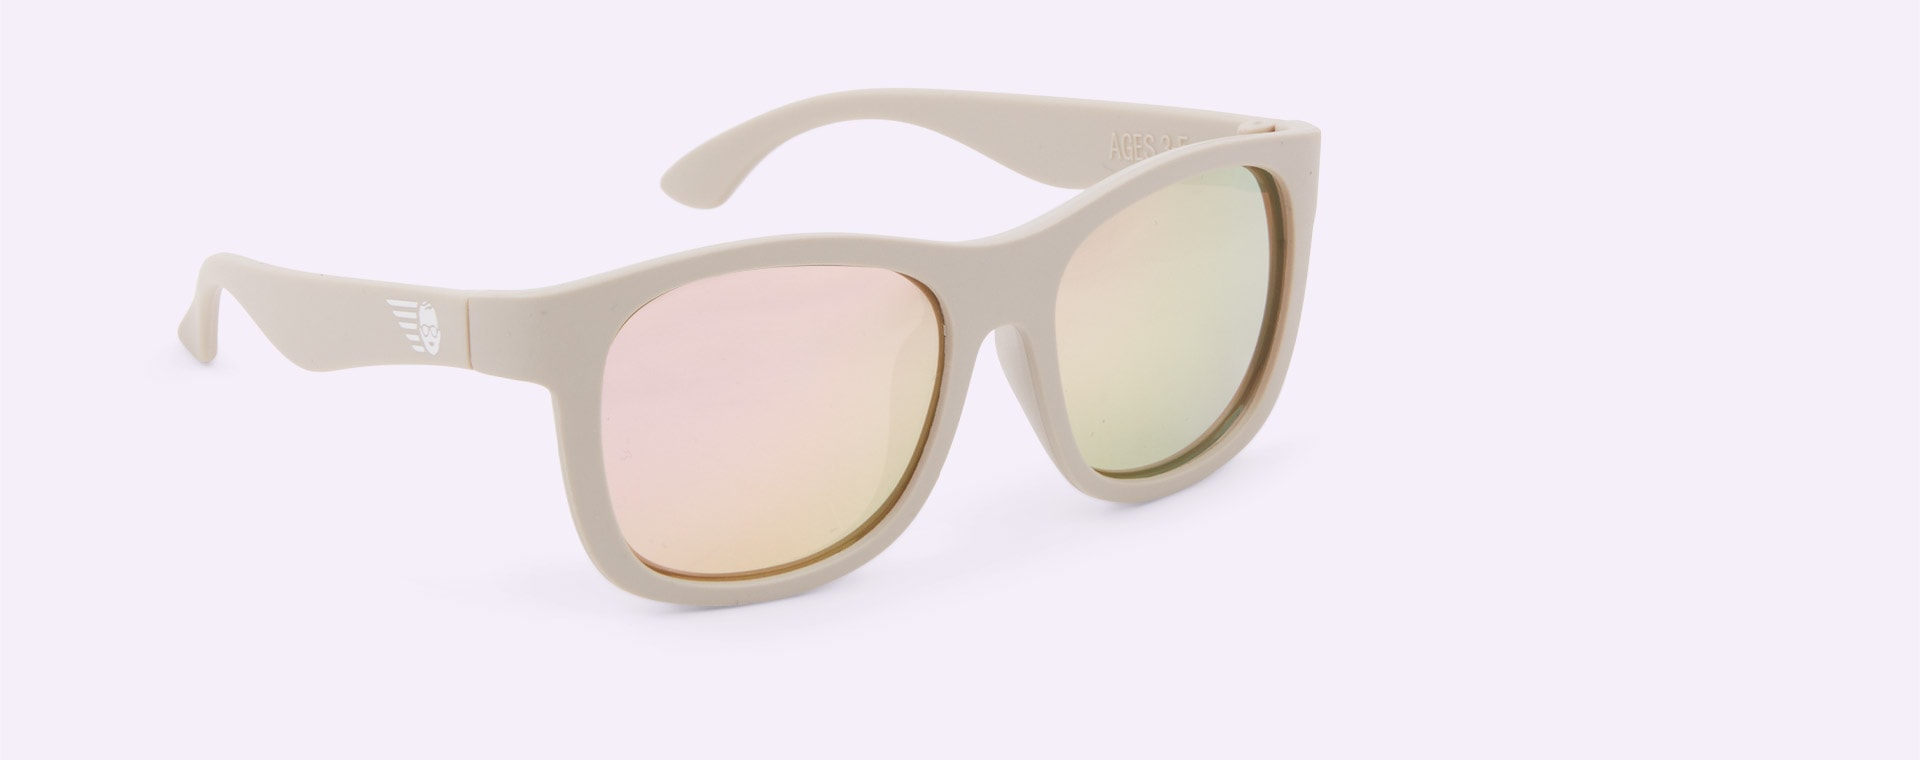 The Hipster Babiators Blue Series Navigator Sunglasses